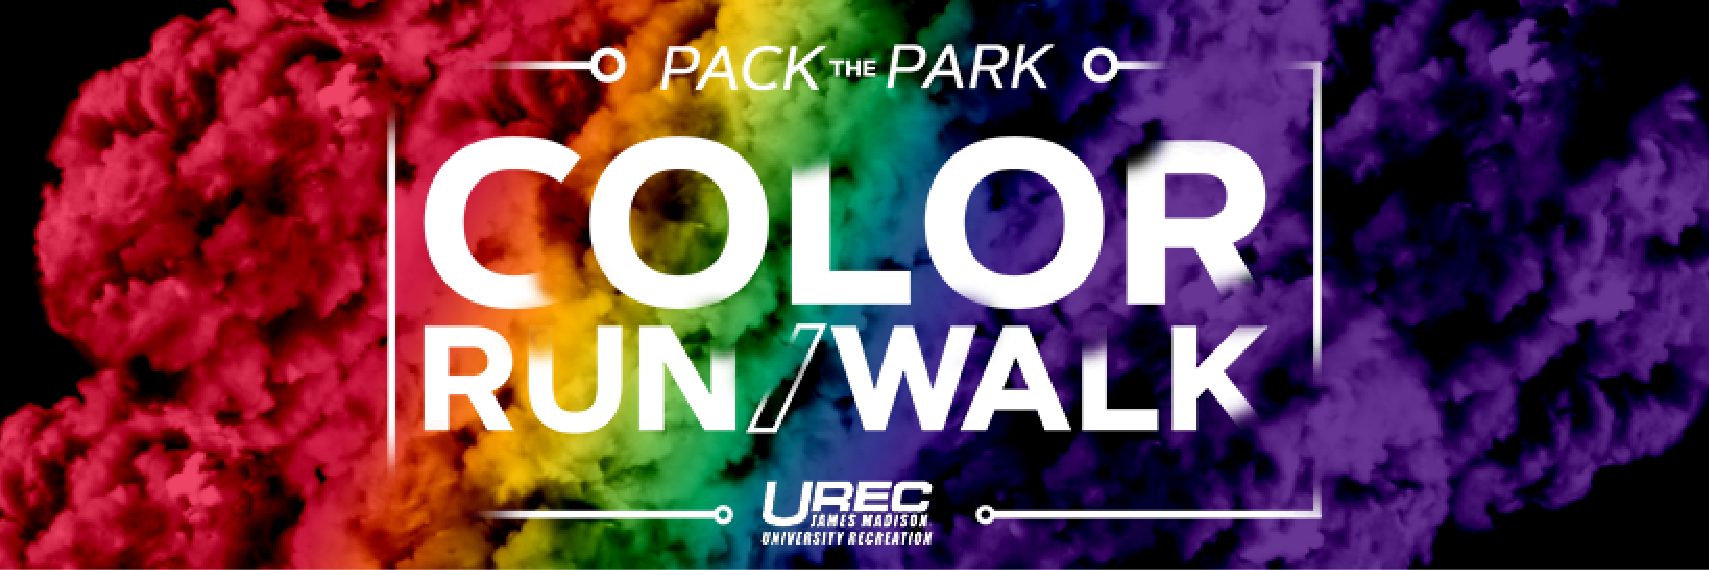 Color Run/Walk